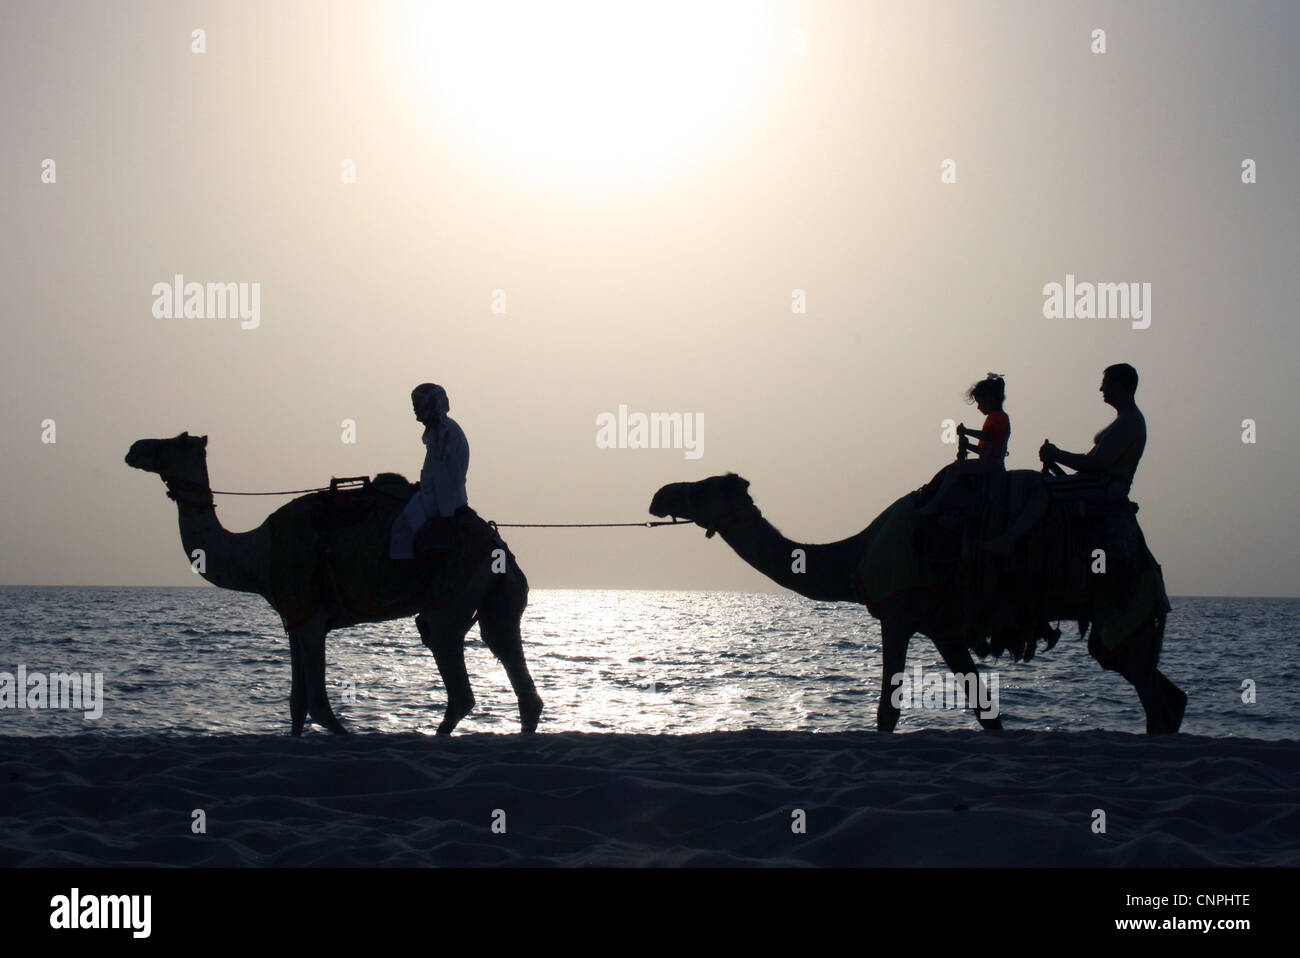 Camel ride on beach against setting sun Stock Photo